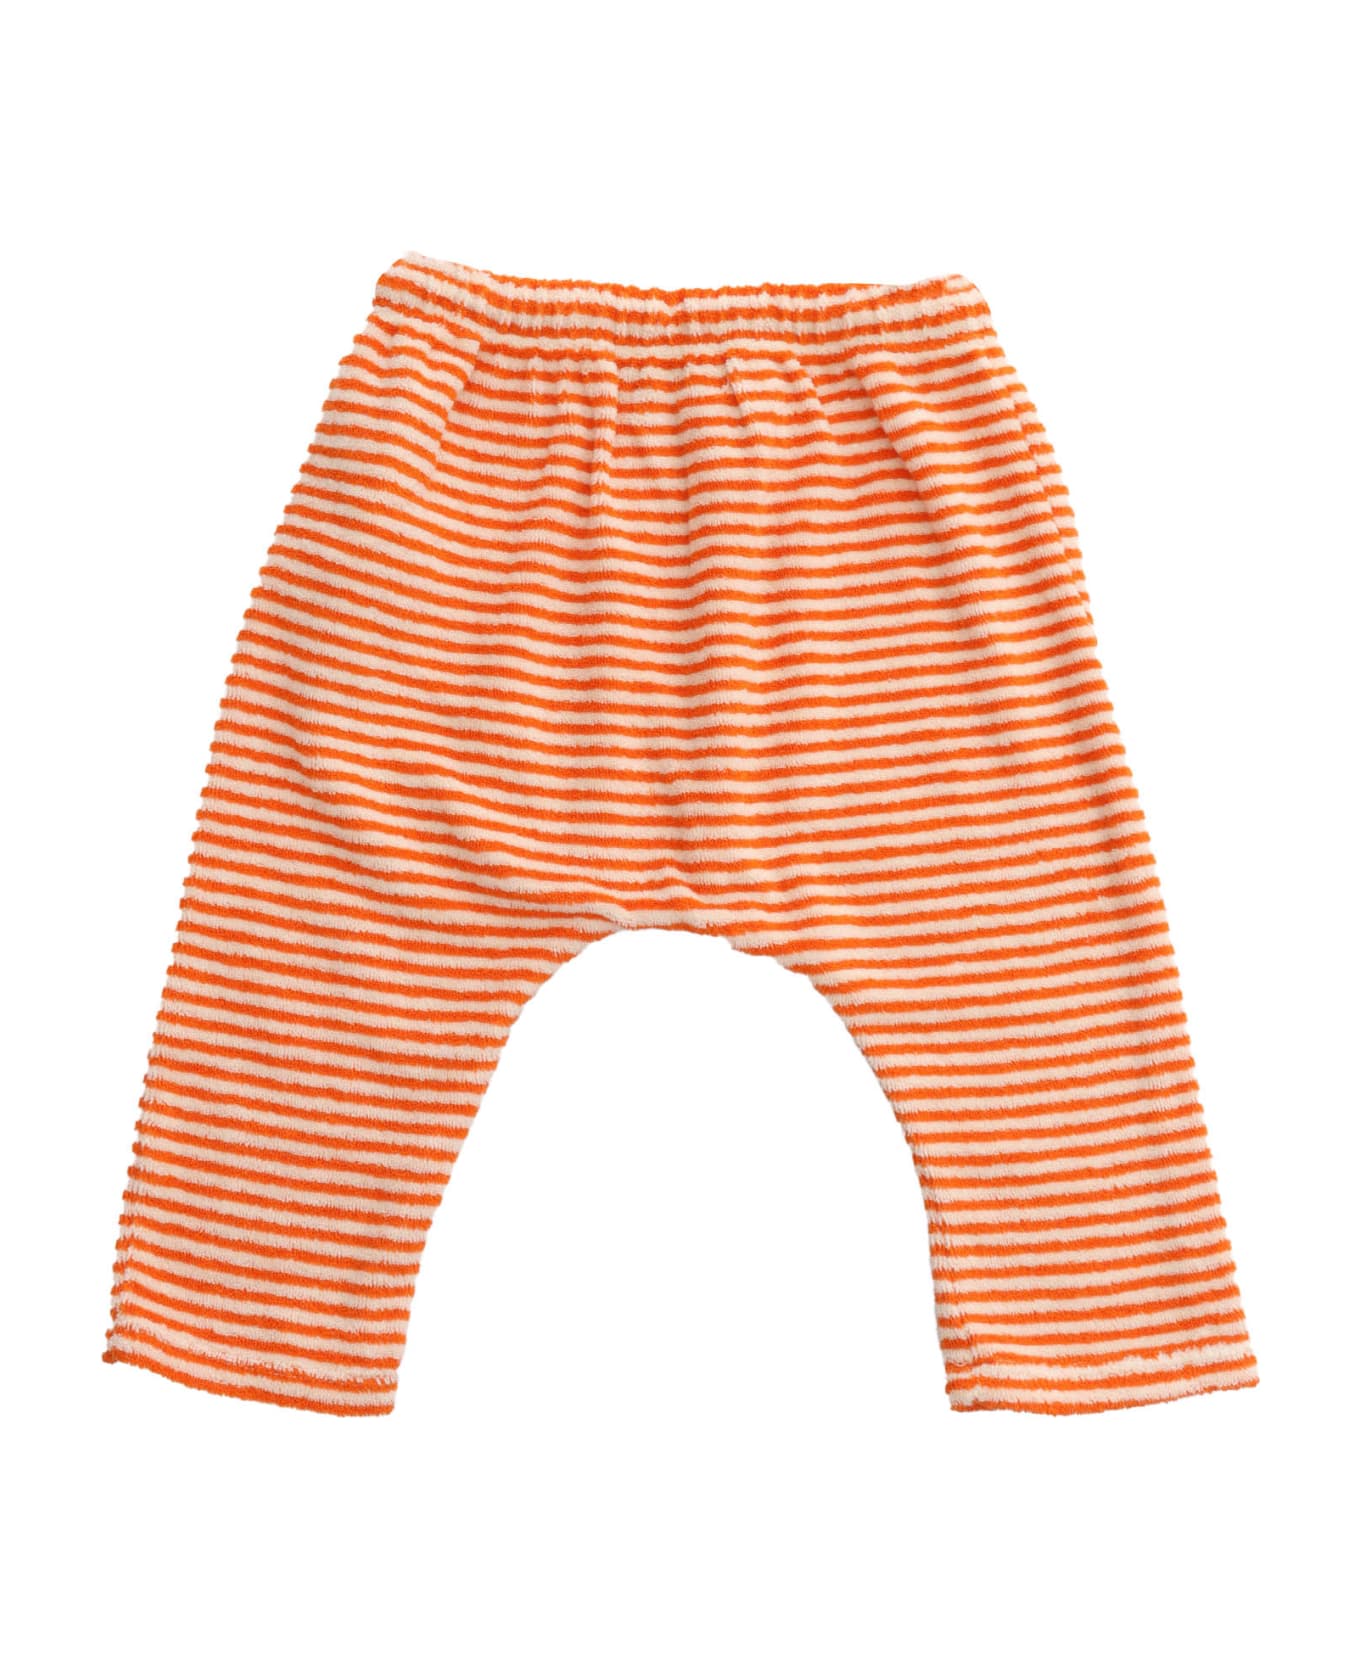 Bobo Choses Pantaloni Arancioni Da Neonato - ORANGE